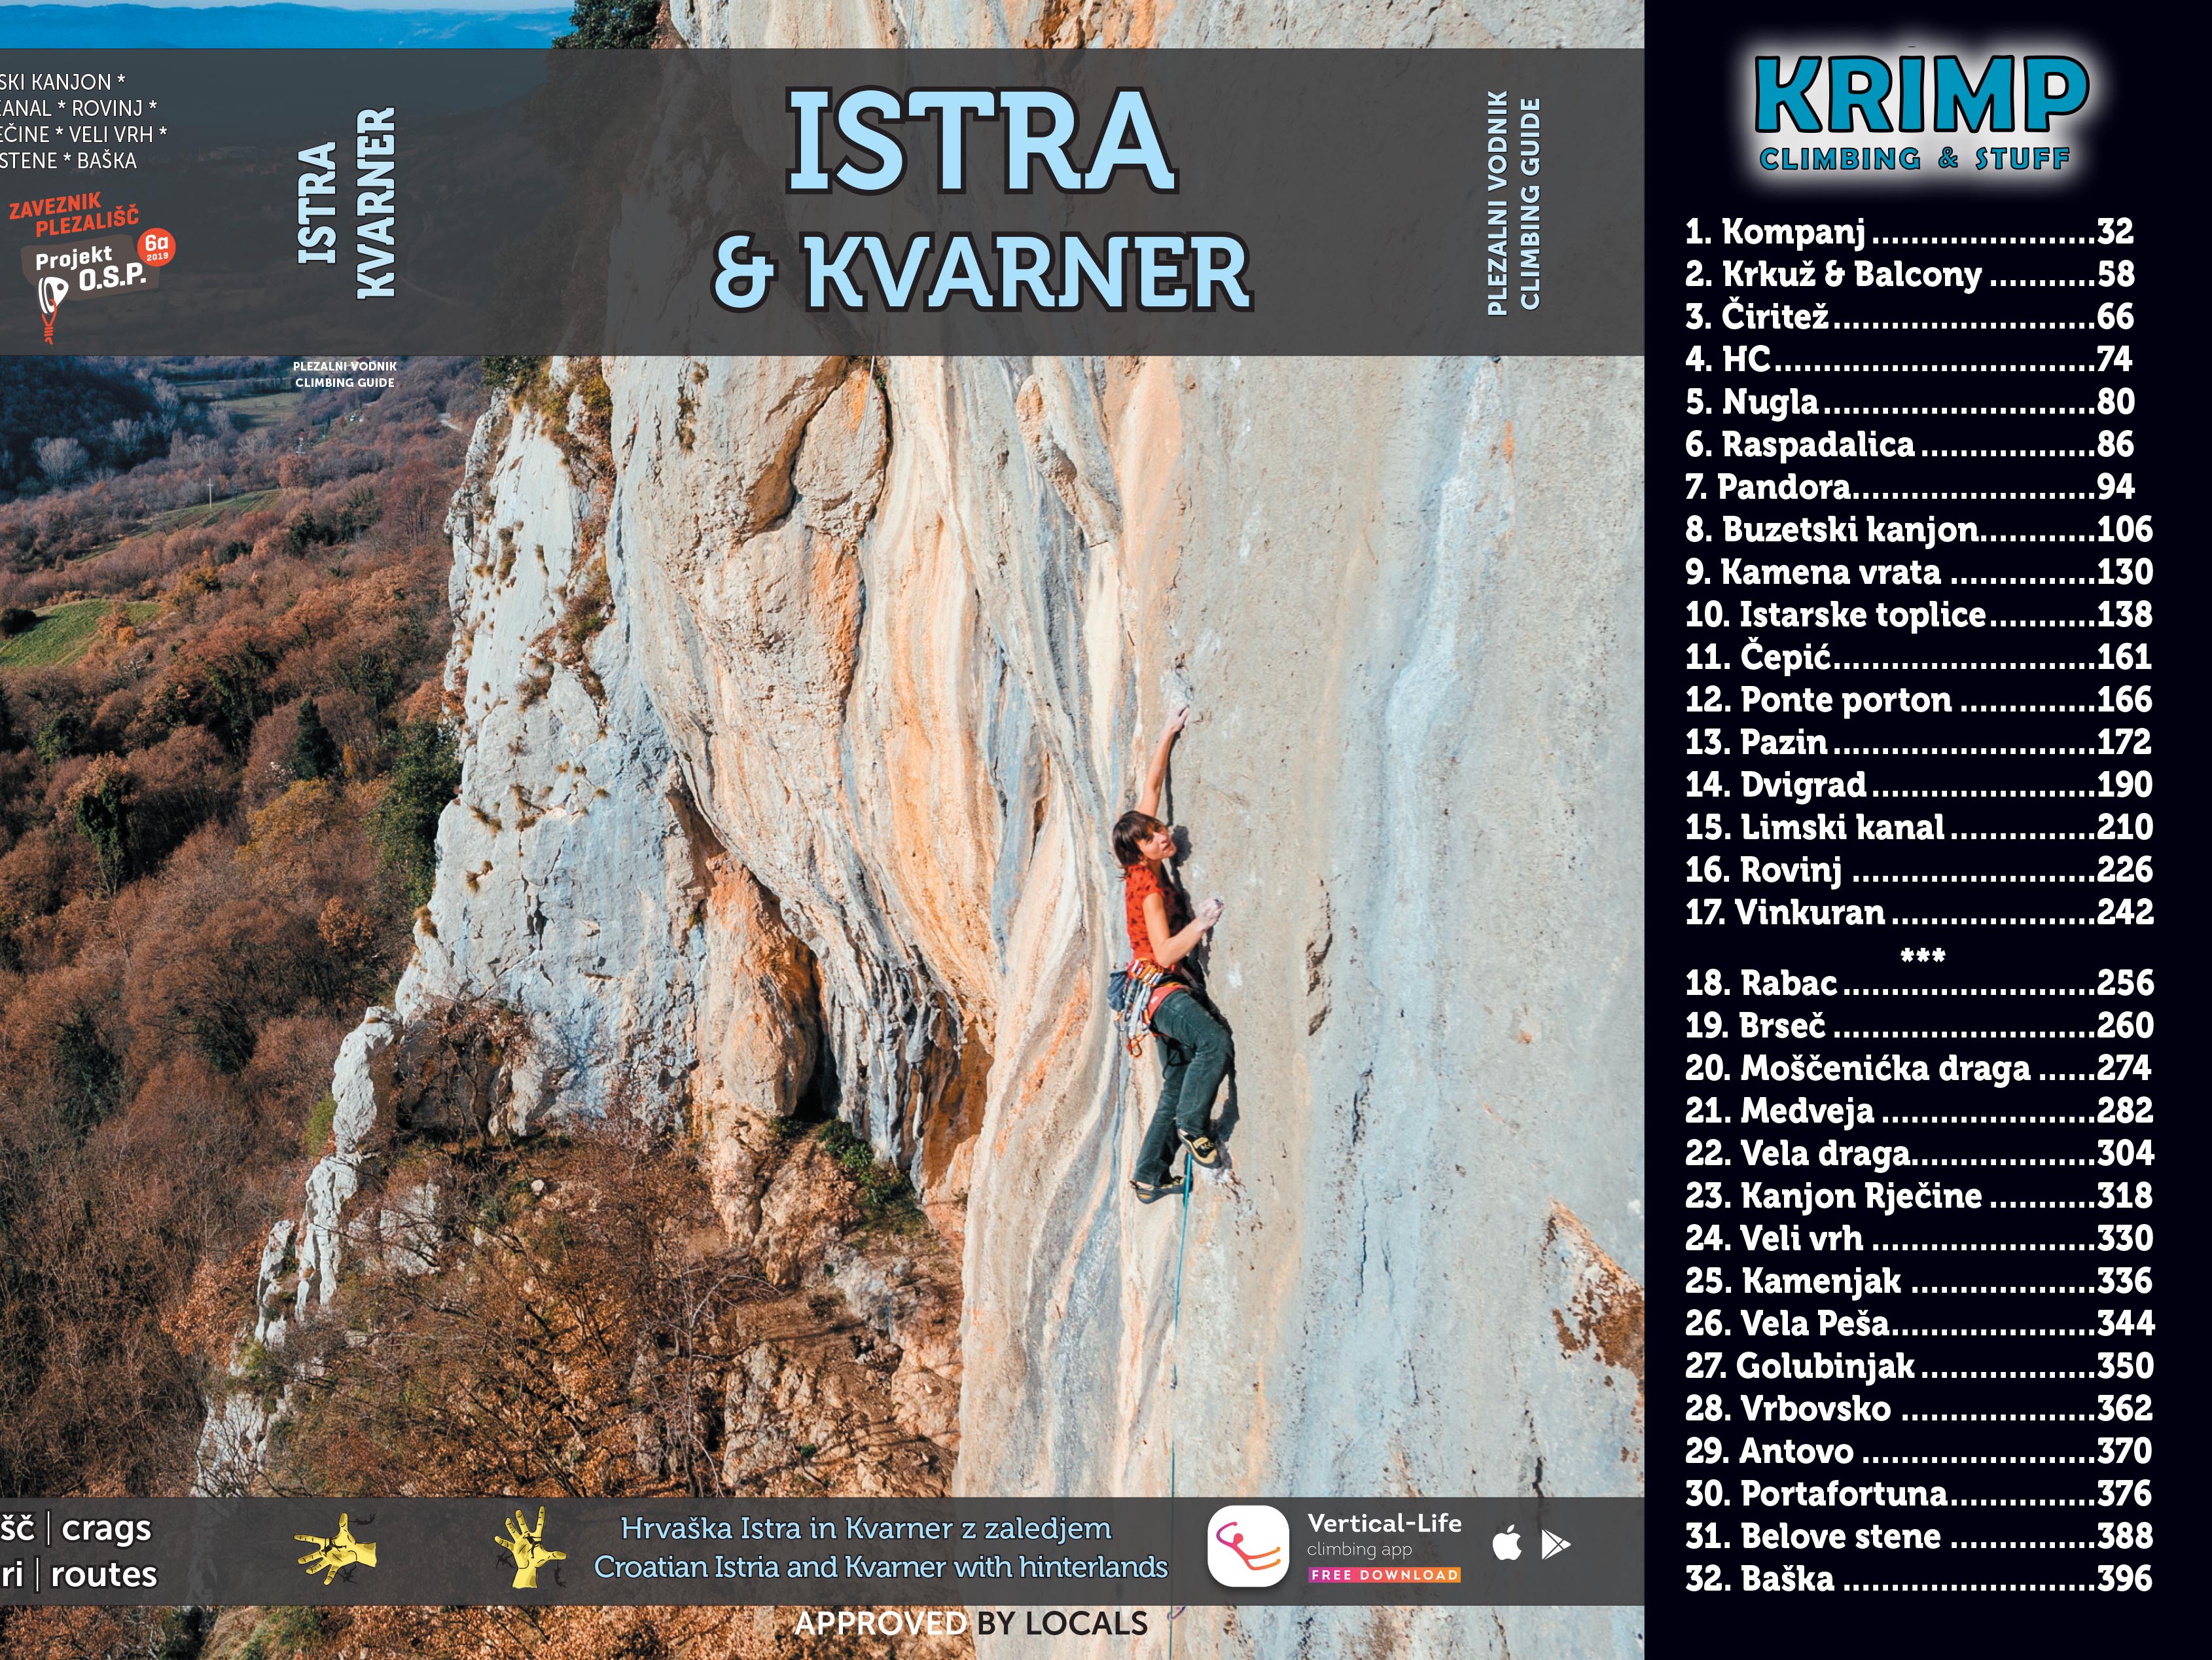 Climbing guide Istra & Kvarner